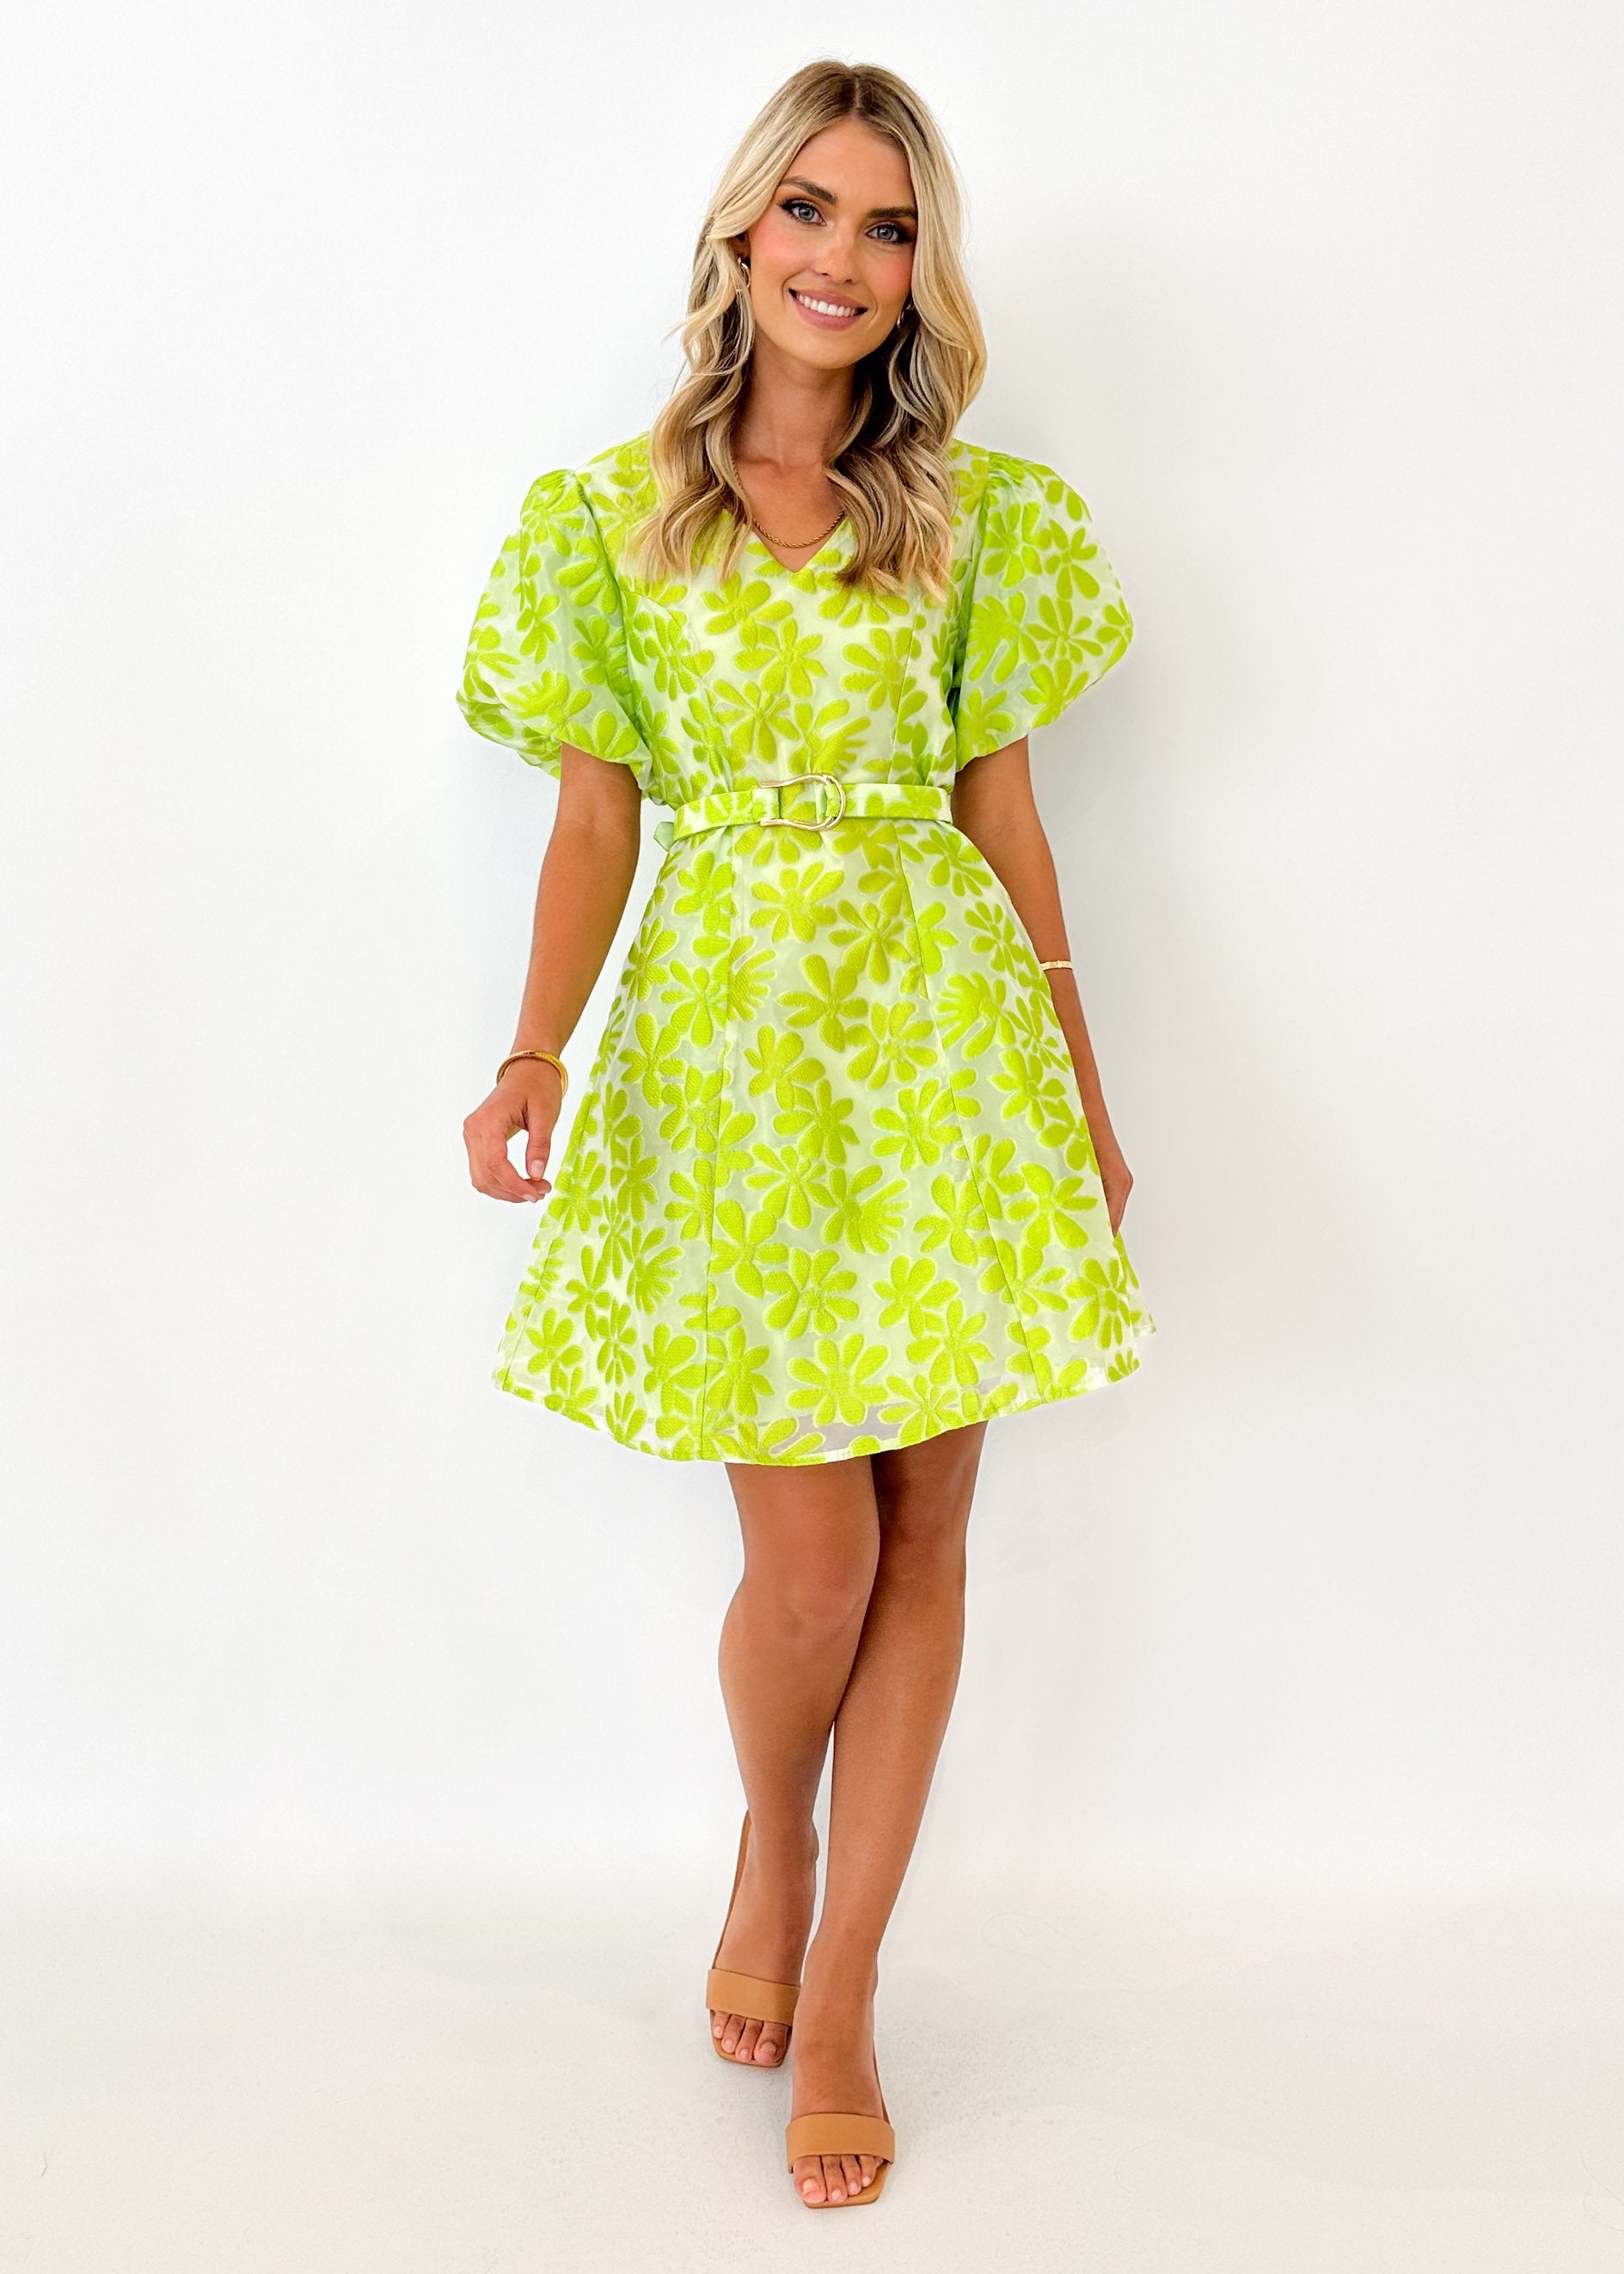 Jaylim Dress - Lime Flowers